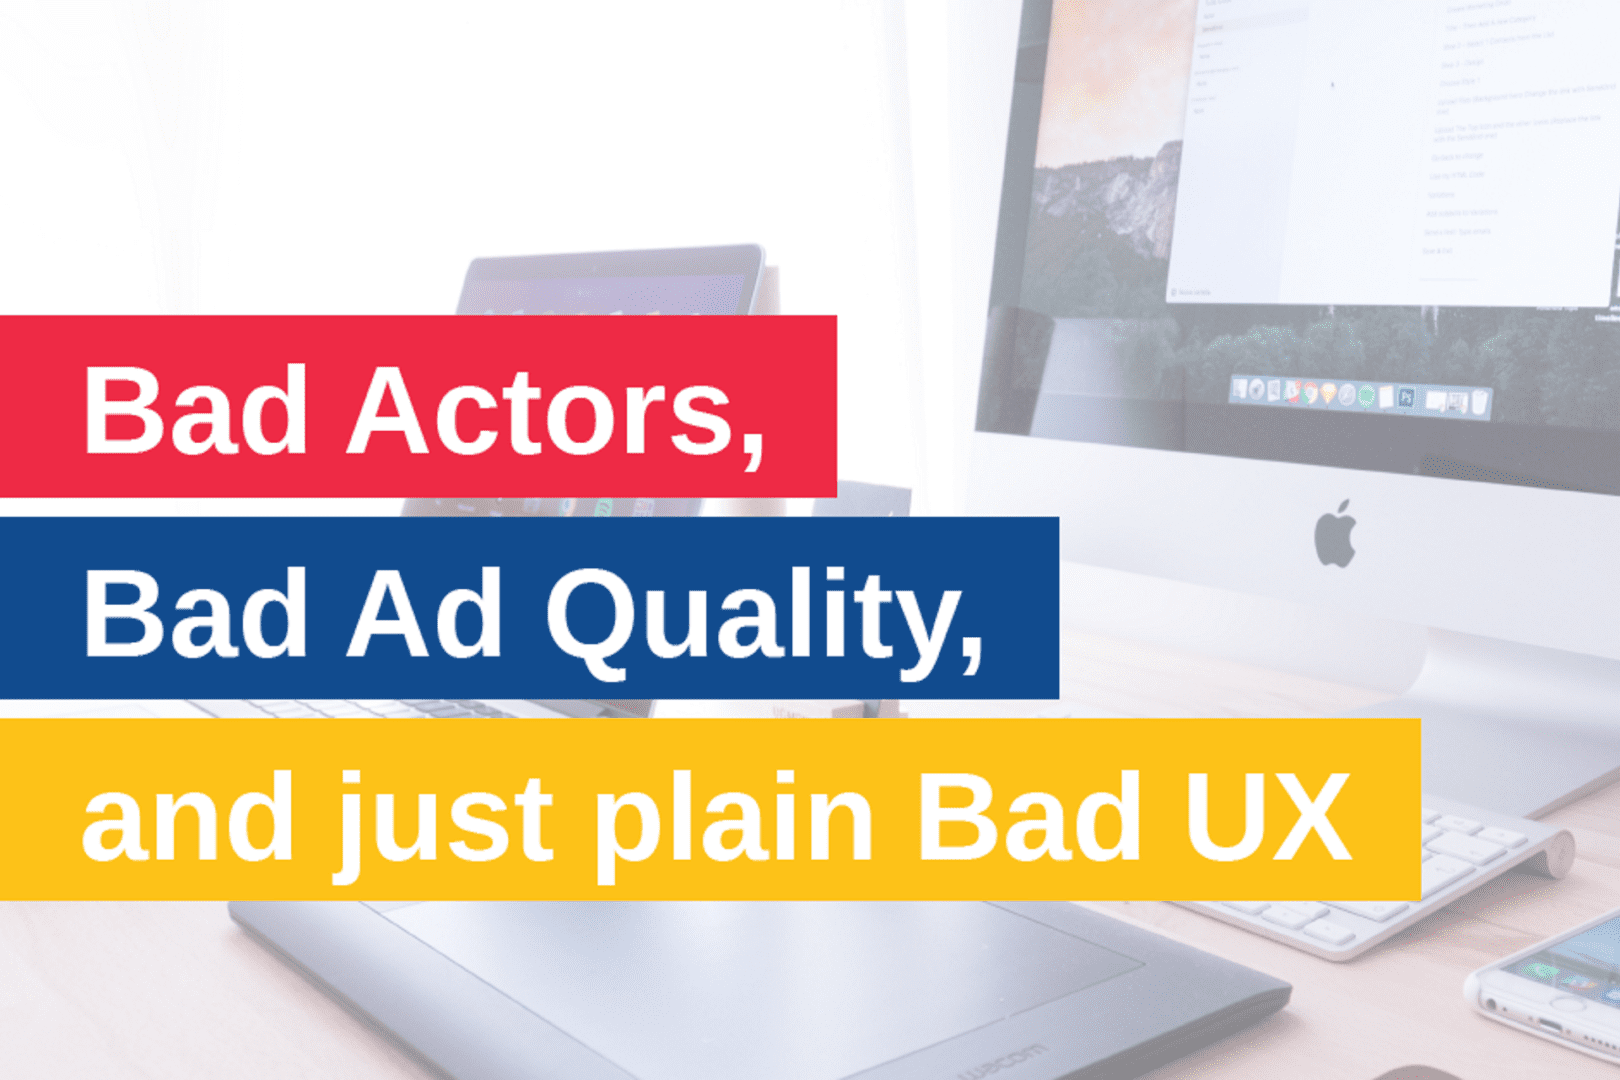 Bad Actors, Bad Ad Quality, and just plain Bad UX